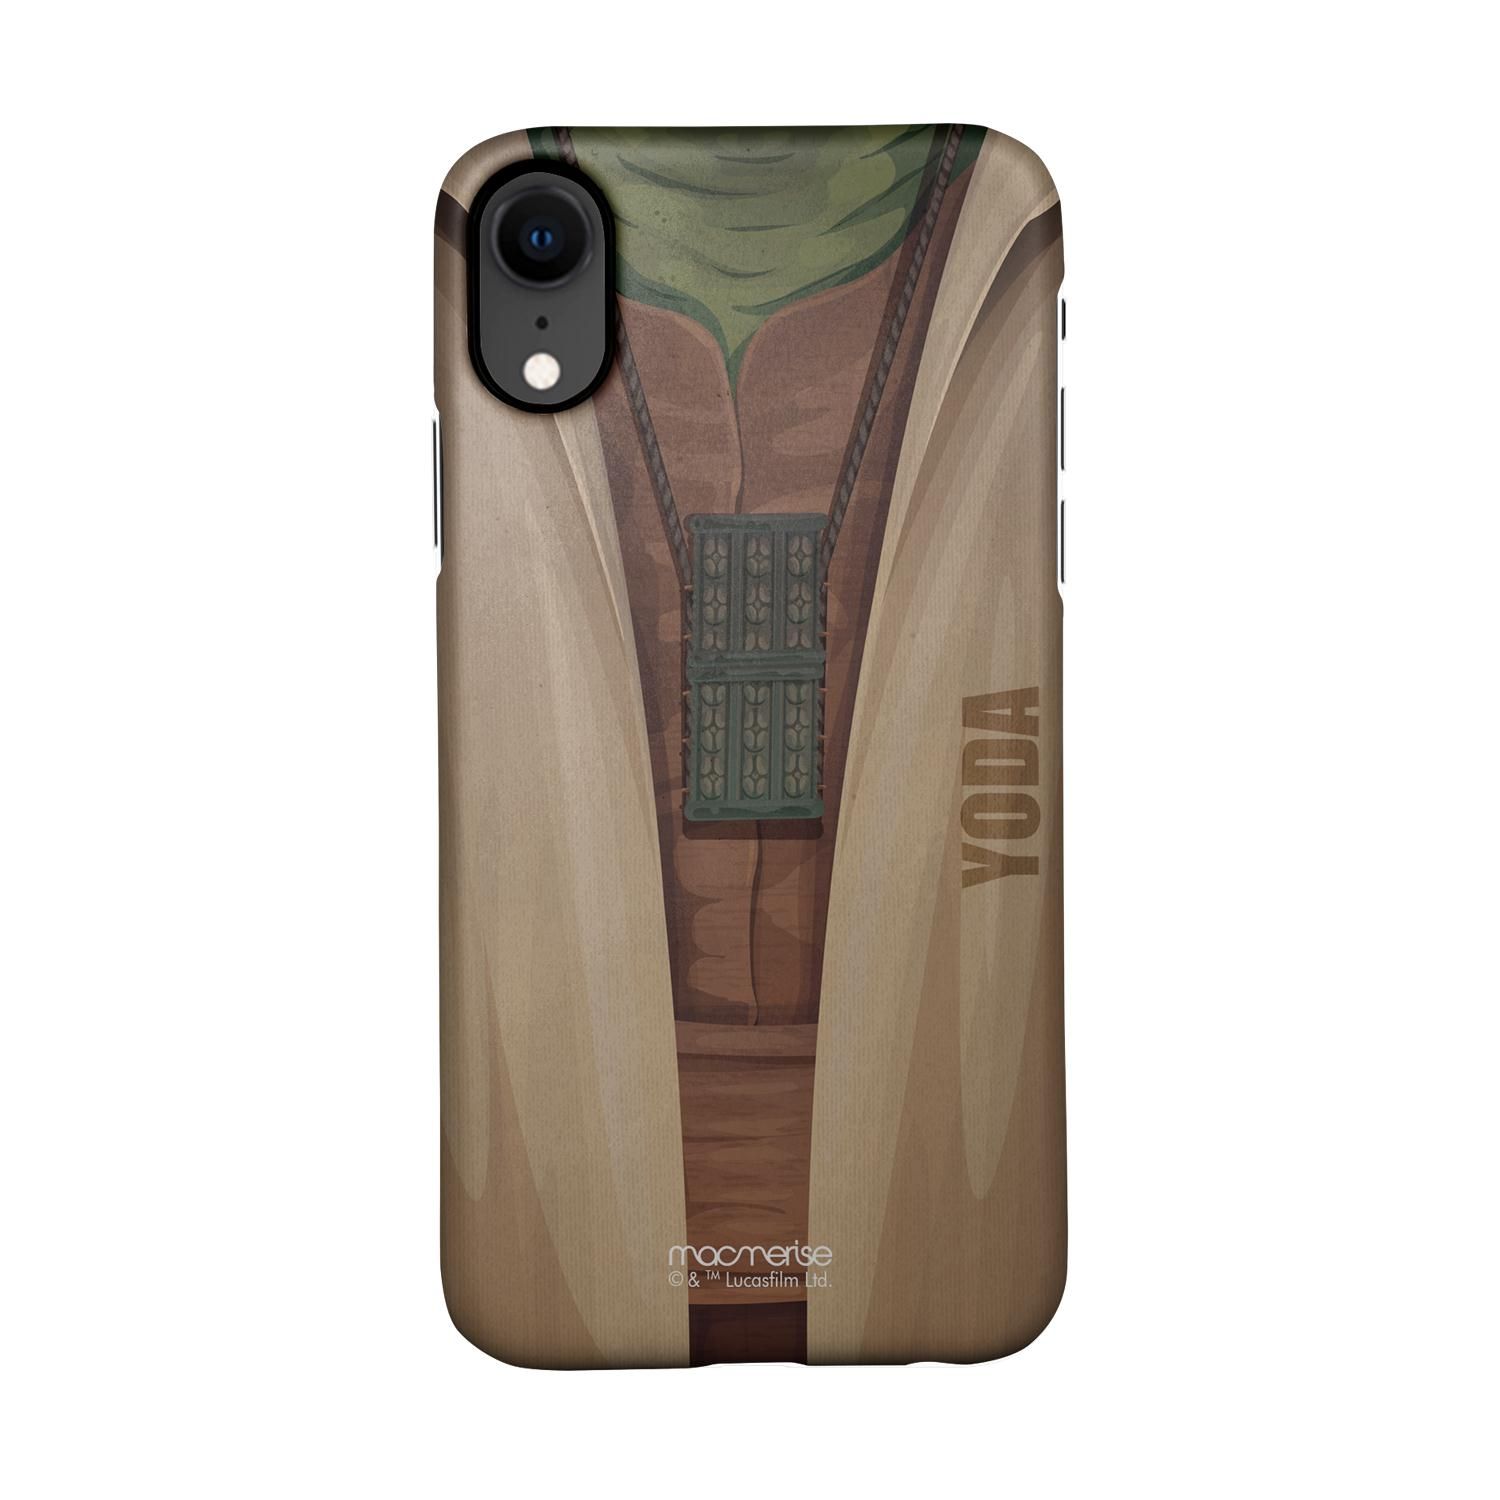 Buy Attire Yoda - Sleek Phone Case for iPhone XR Online